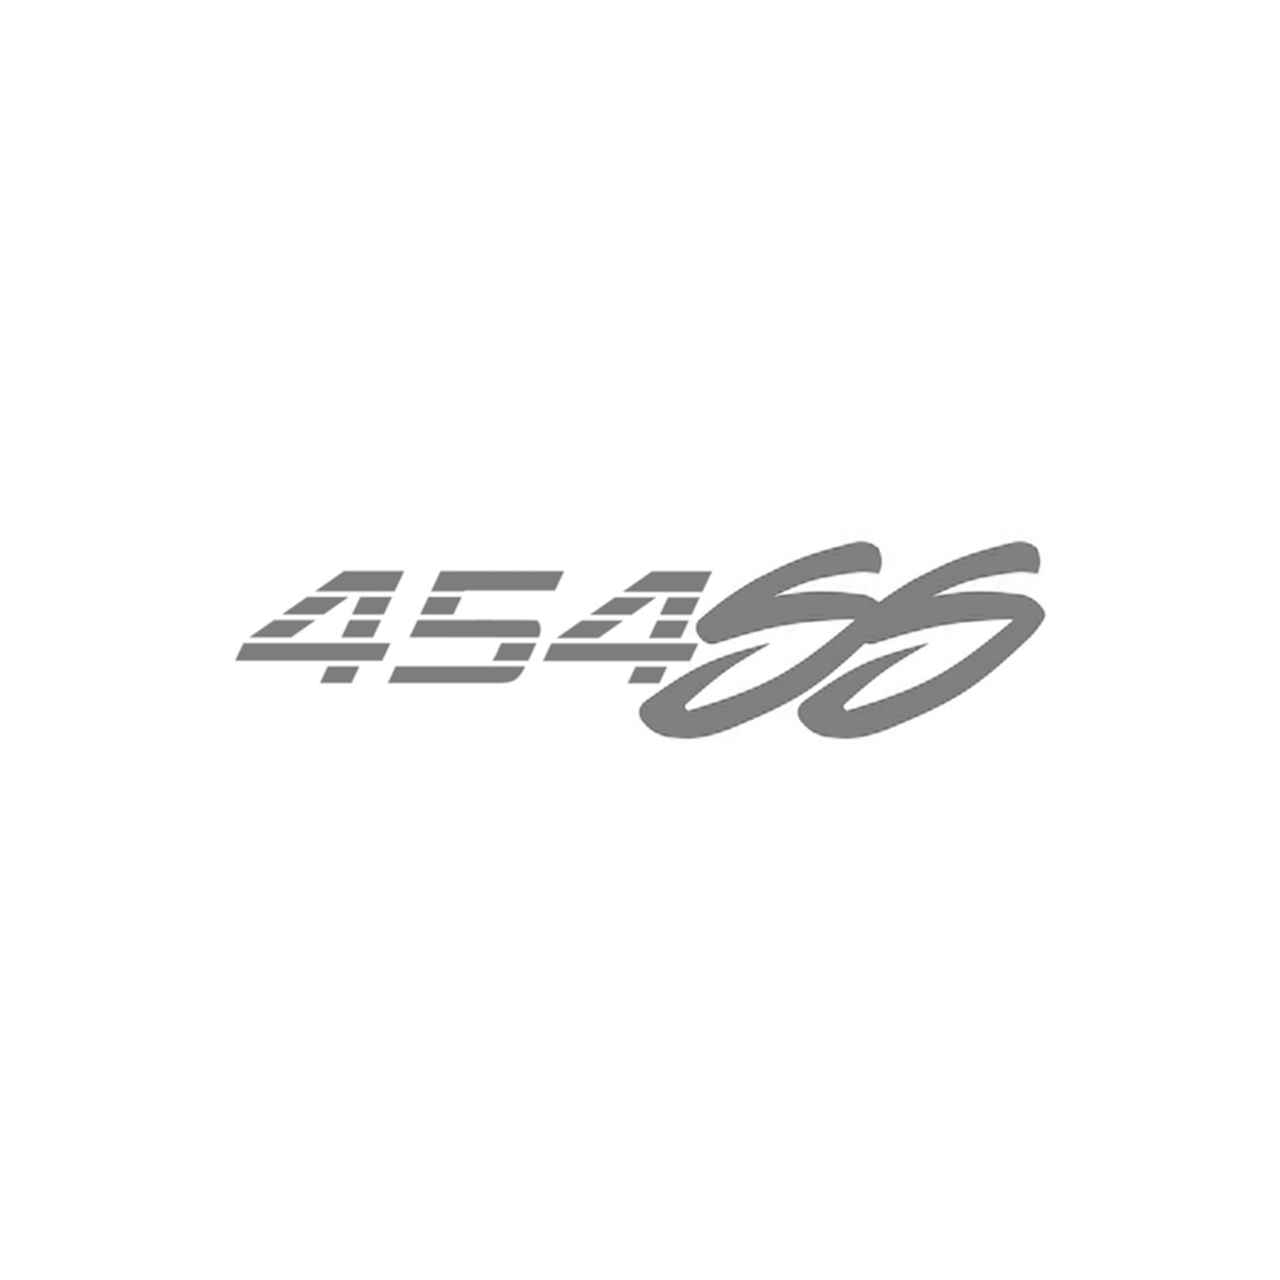 SS 454 Logo - Chevrolet 454 Ss Logo Vinyl Decal